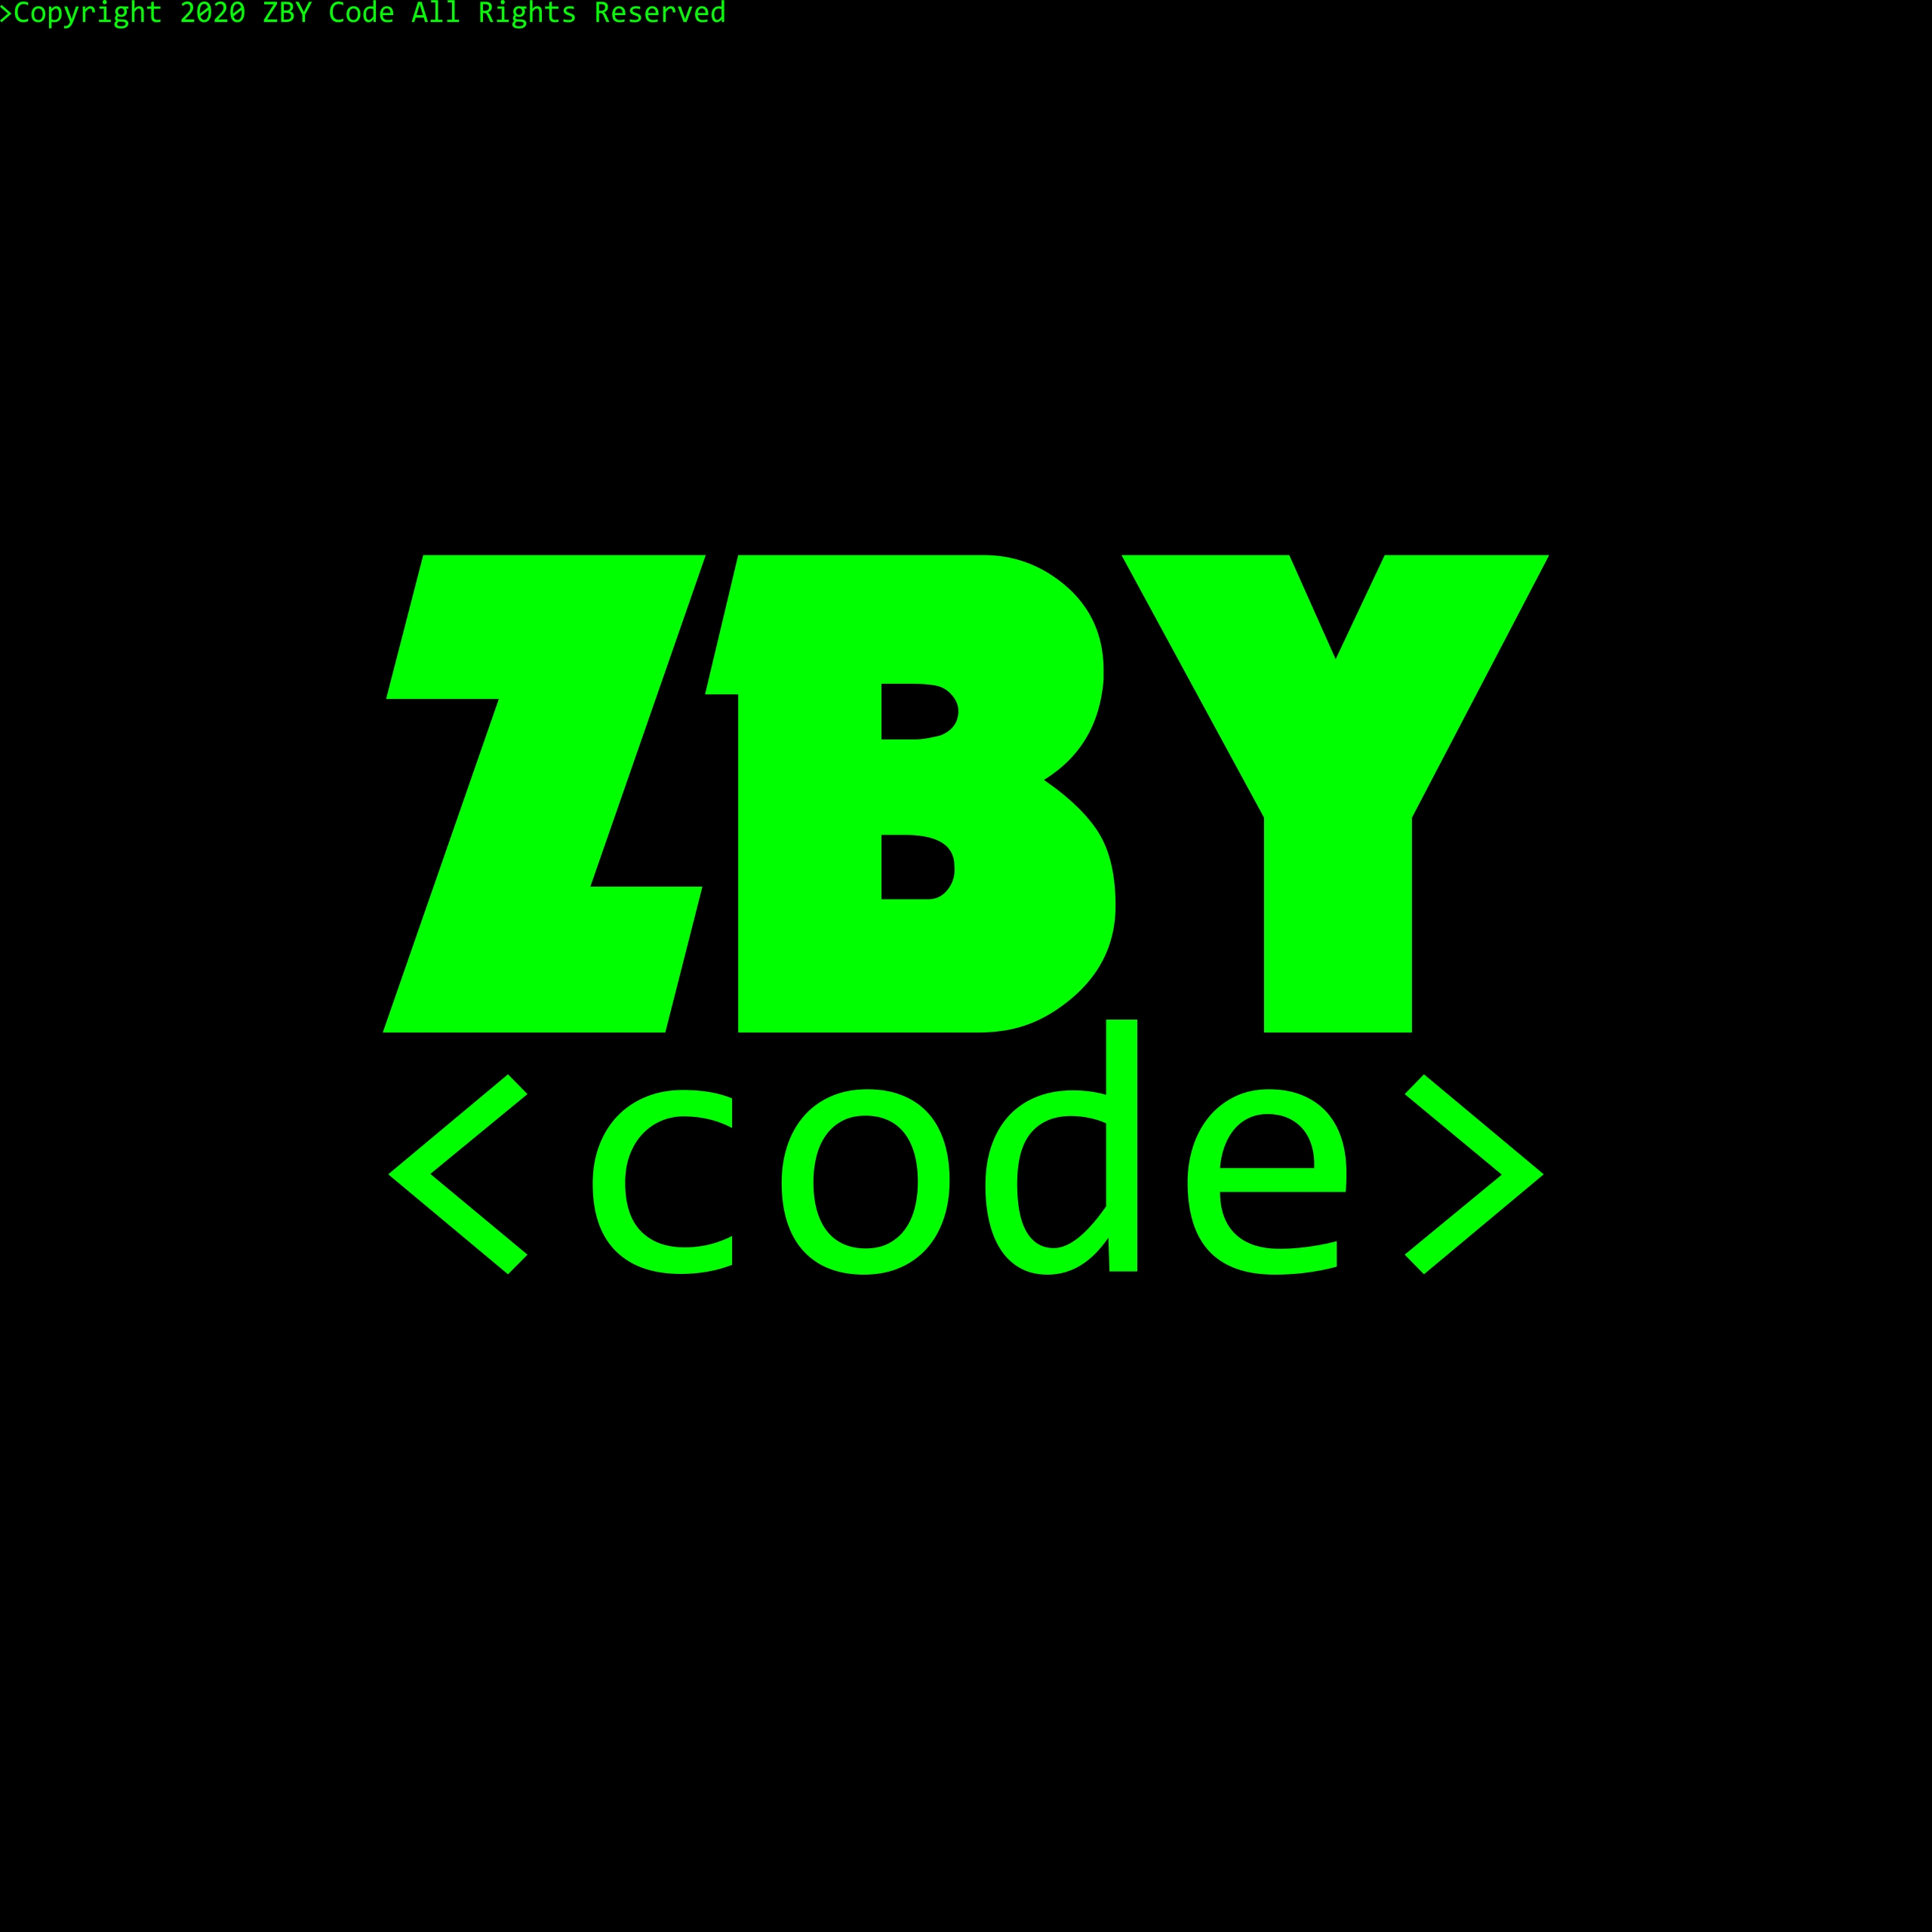 (c) Zbycode.com